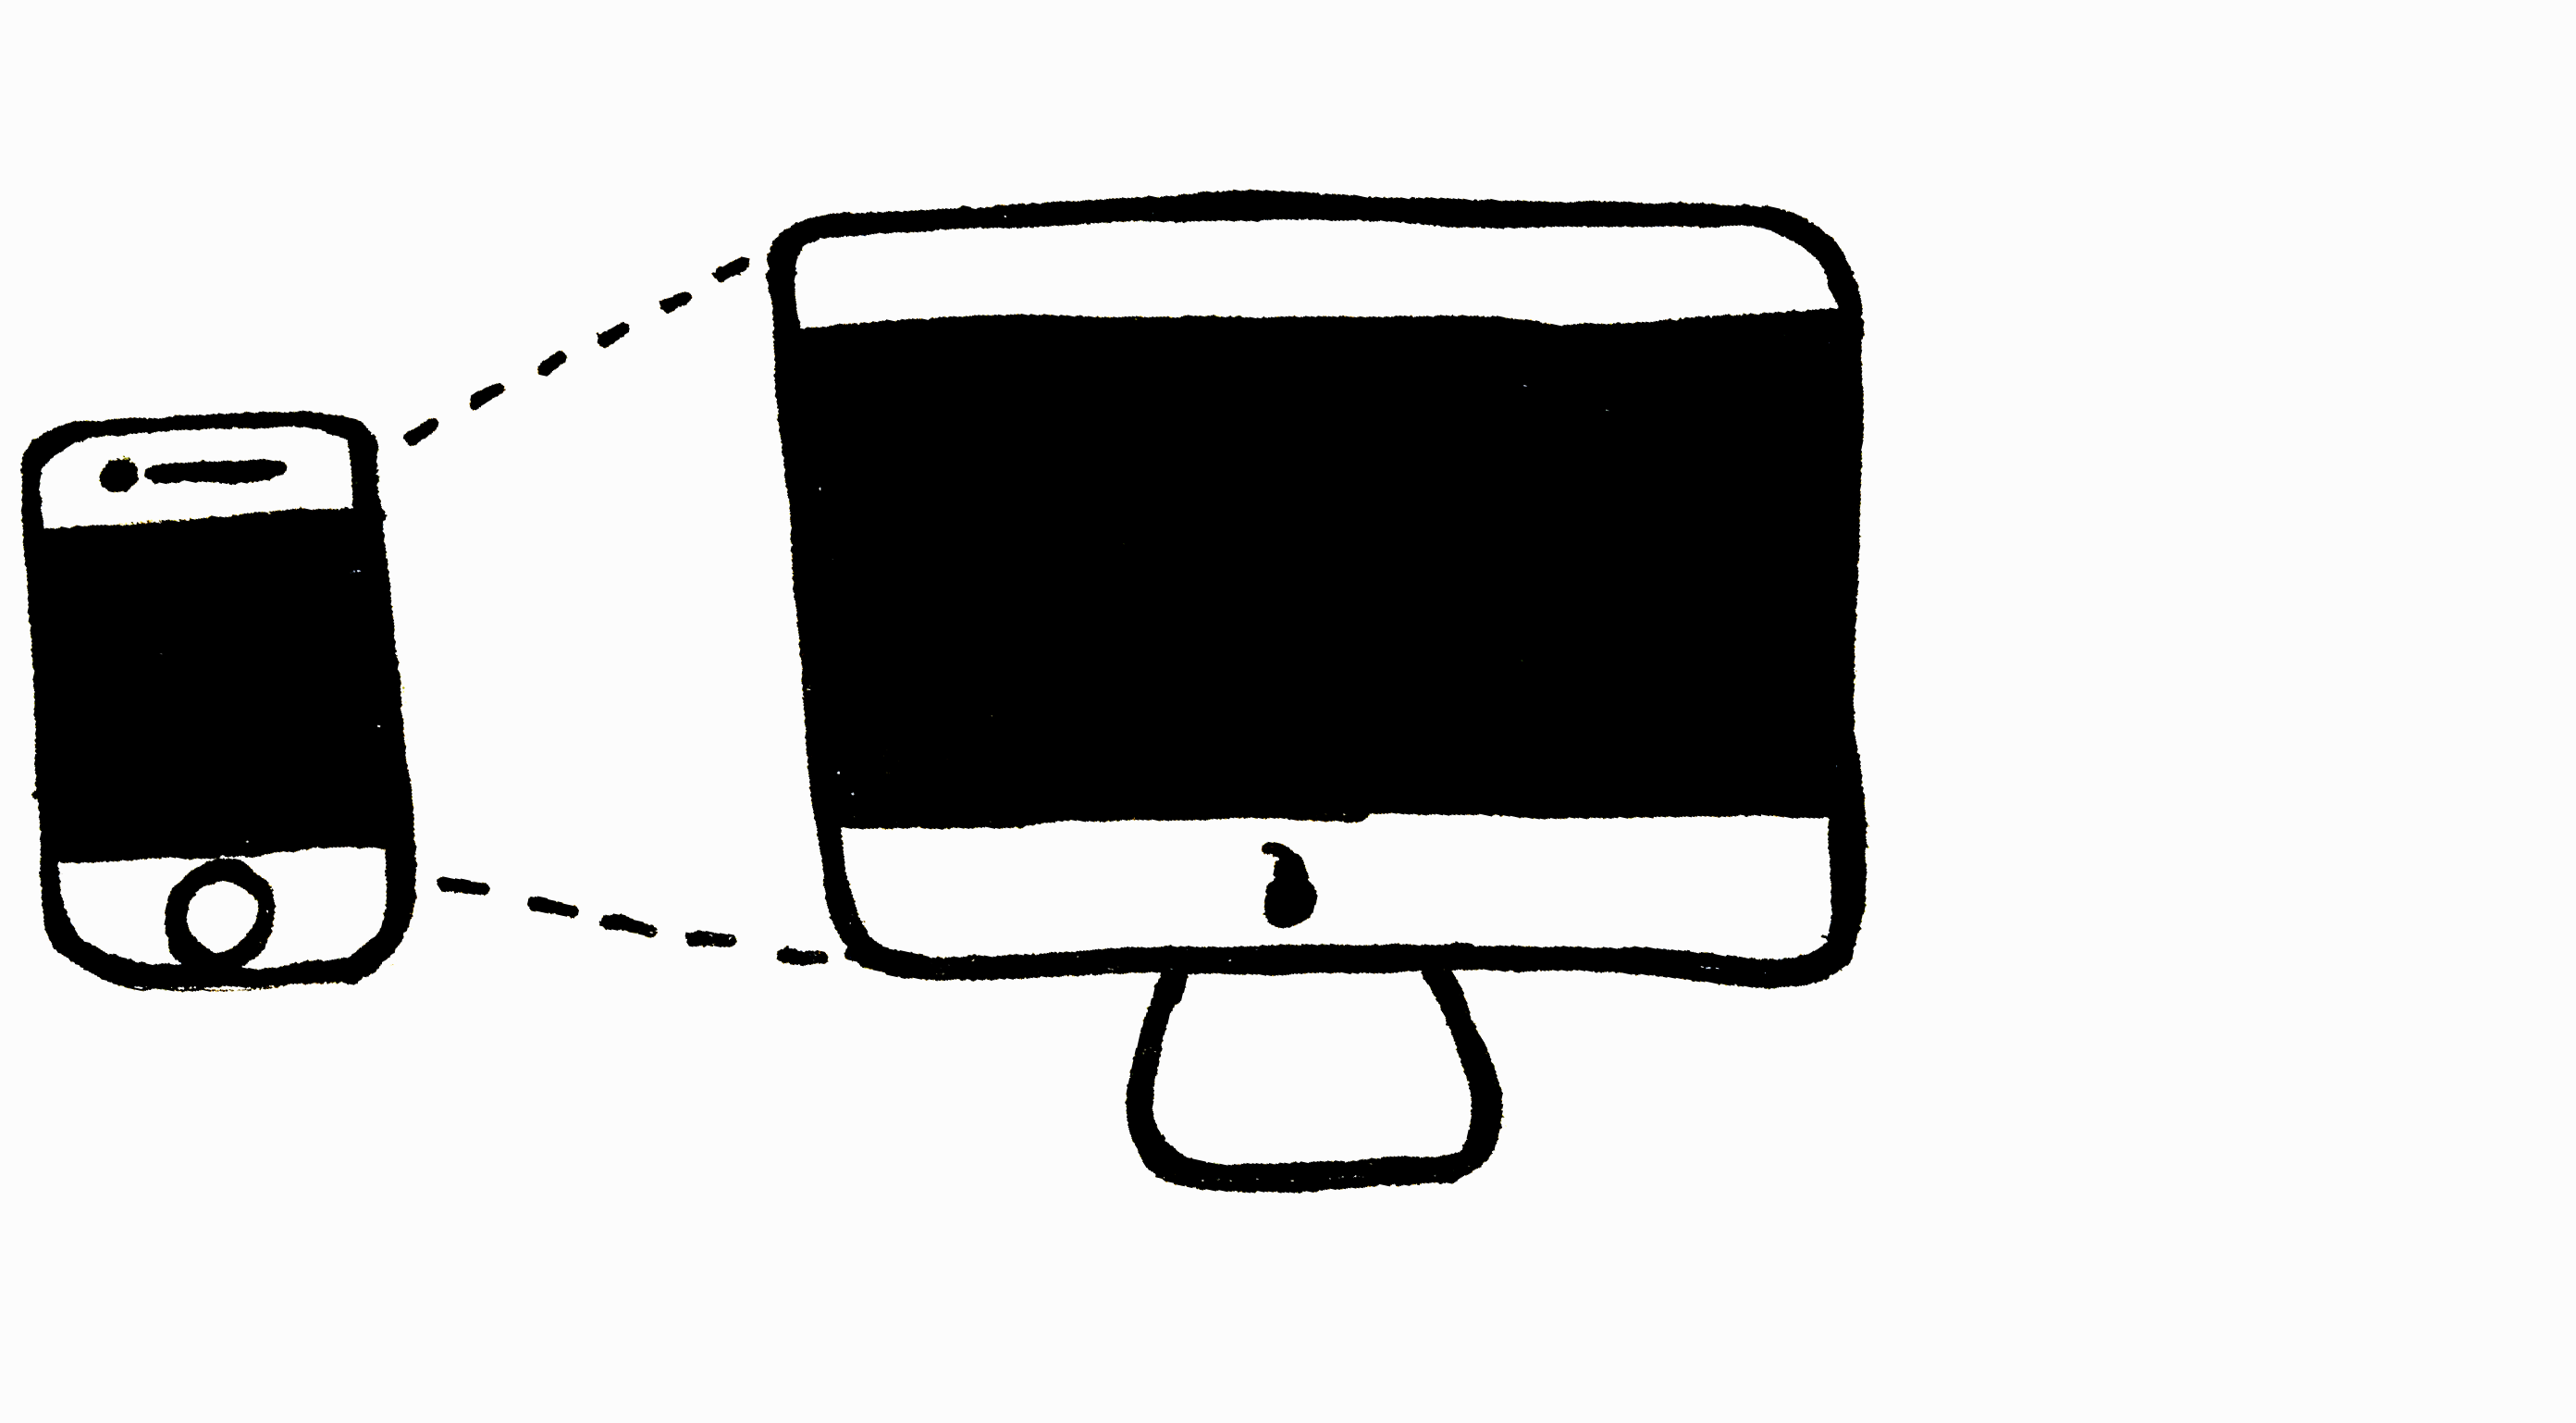 An illustration of a smartphone next to a desktop computer.